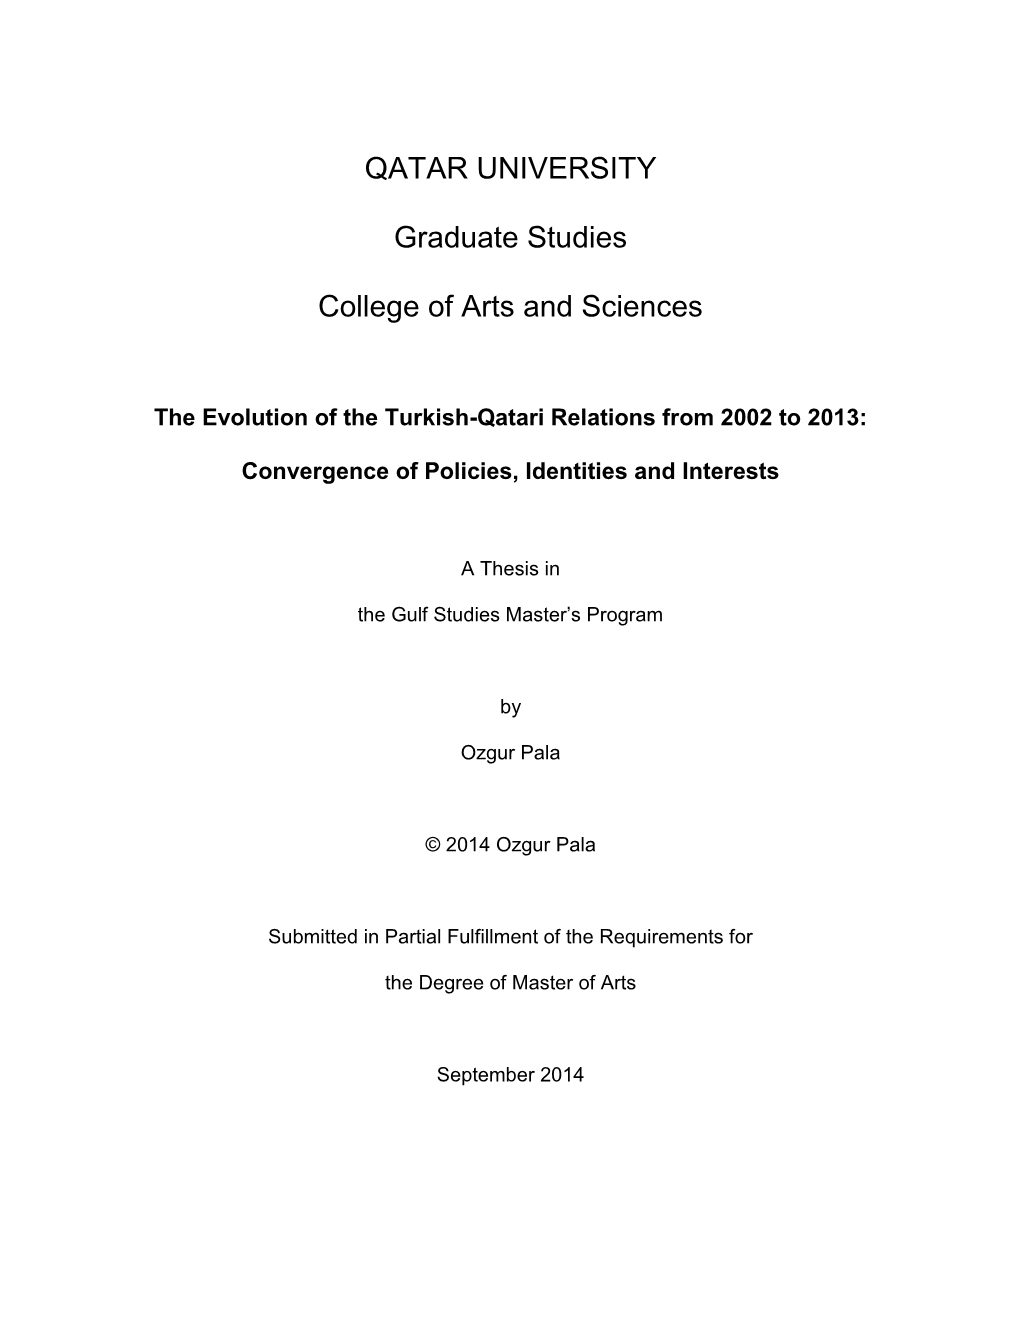 QATAR UNIVERSITY Graduate Studies College of Arts and Sciences